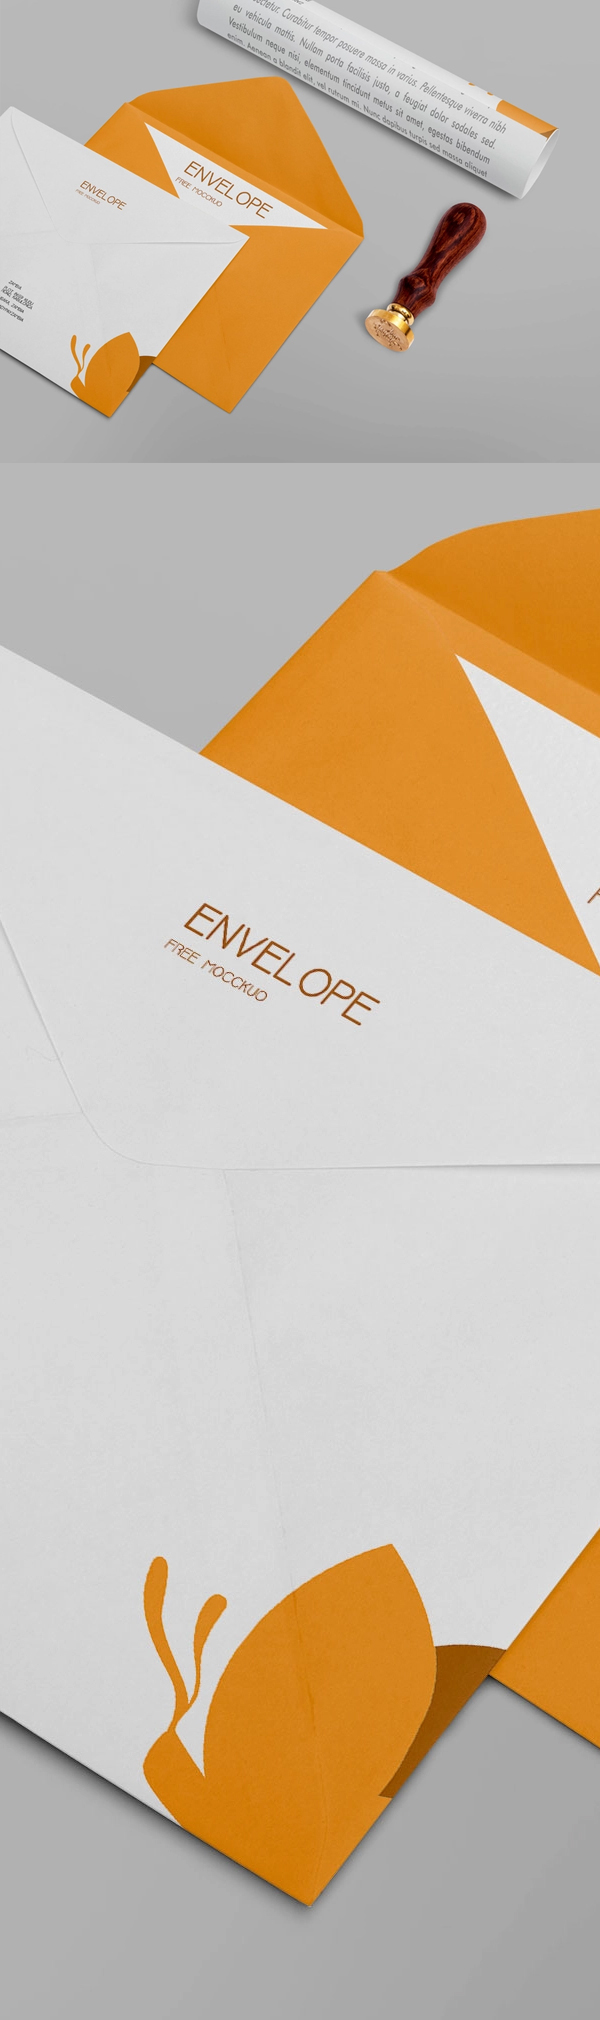 Free Company Envelope Design Mockup